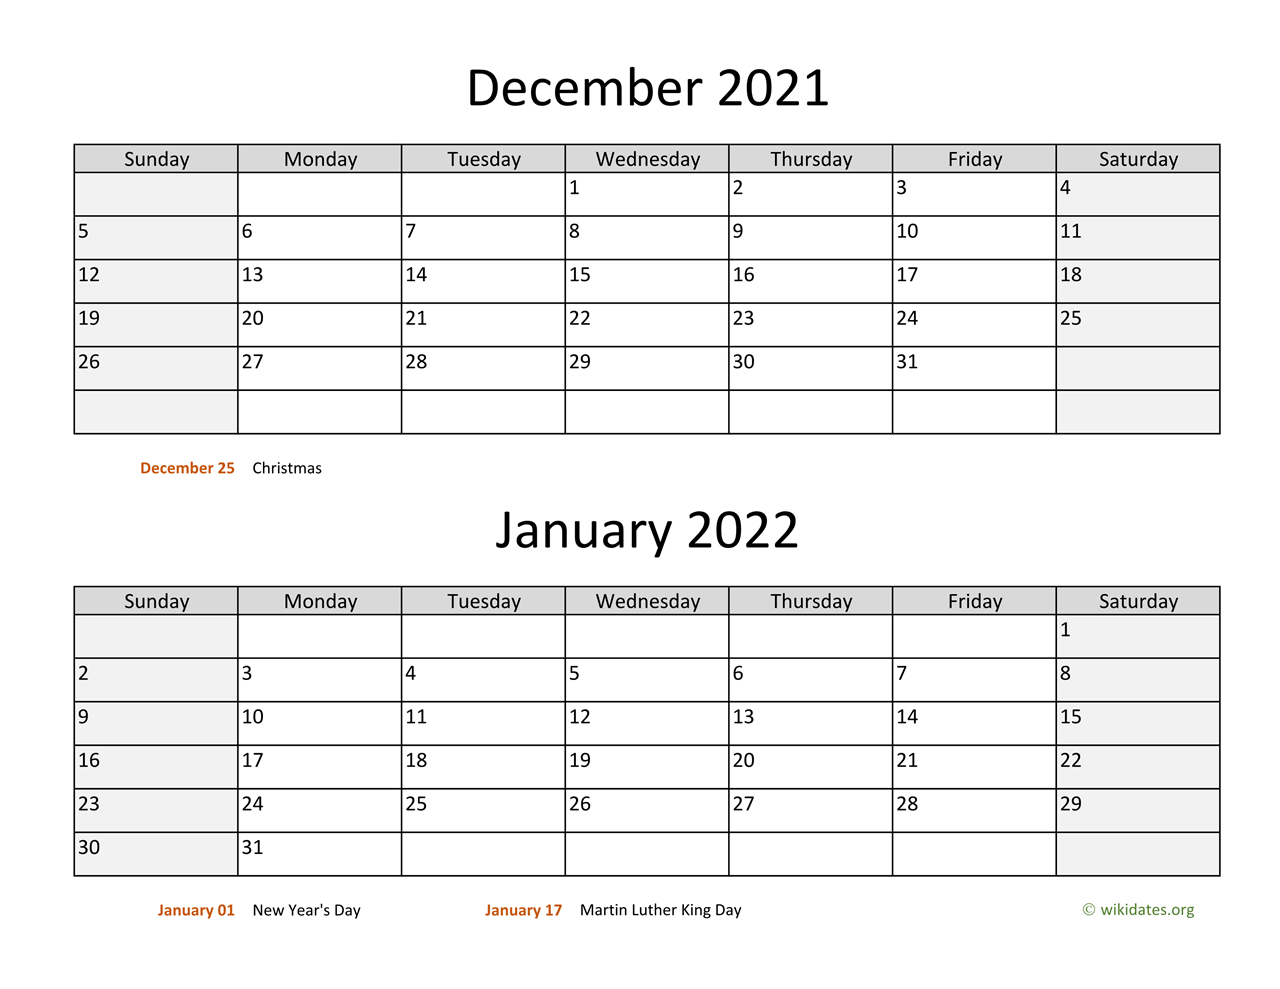 December 2021 To January 2022 Calendar December 2021 And January 2022 Calendar | Wikidates.org